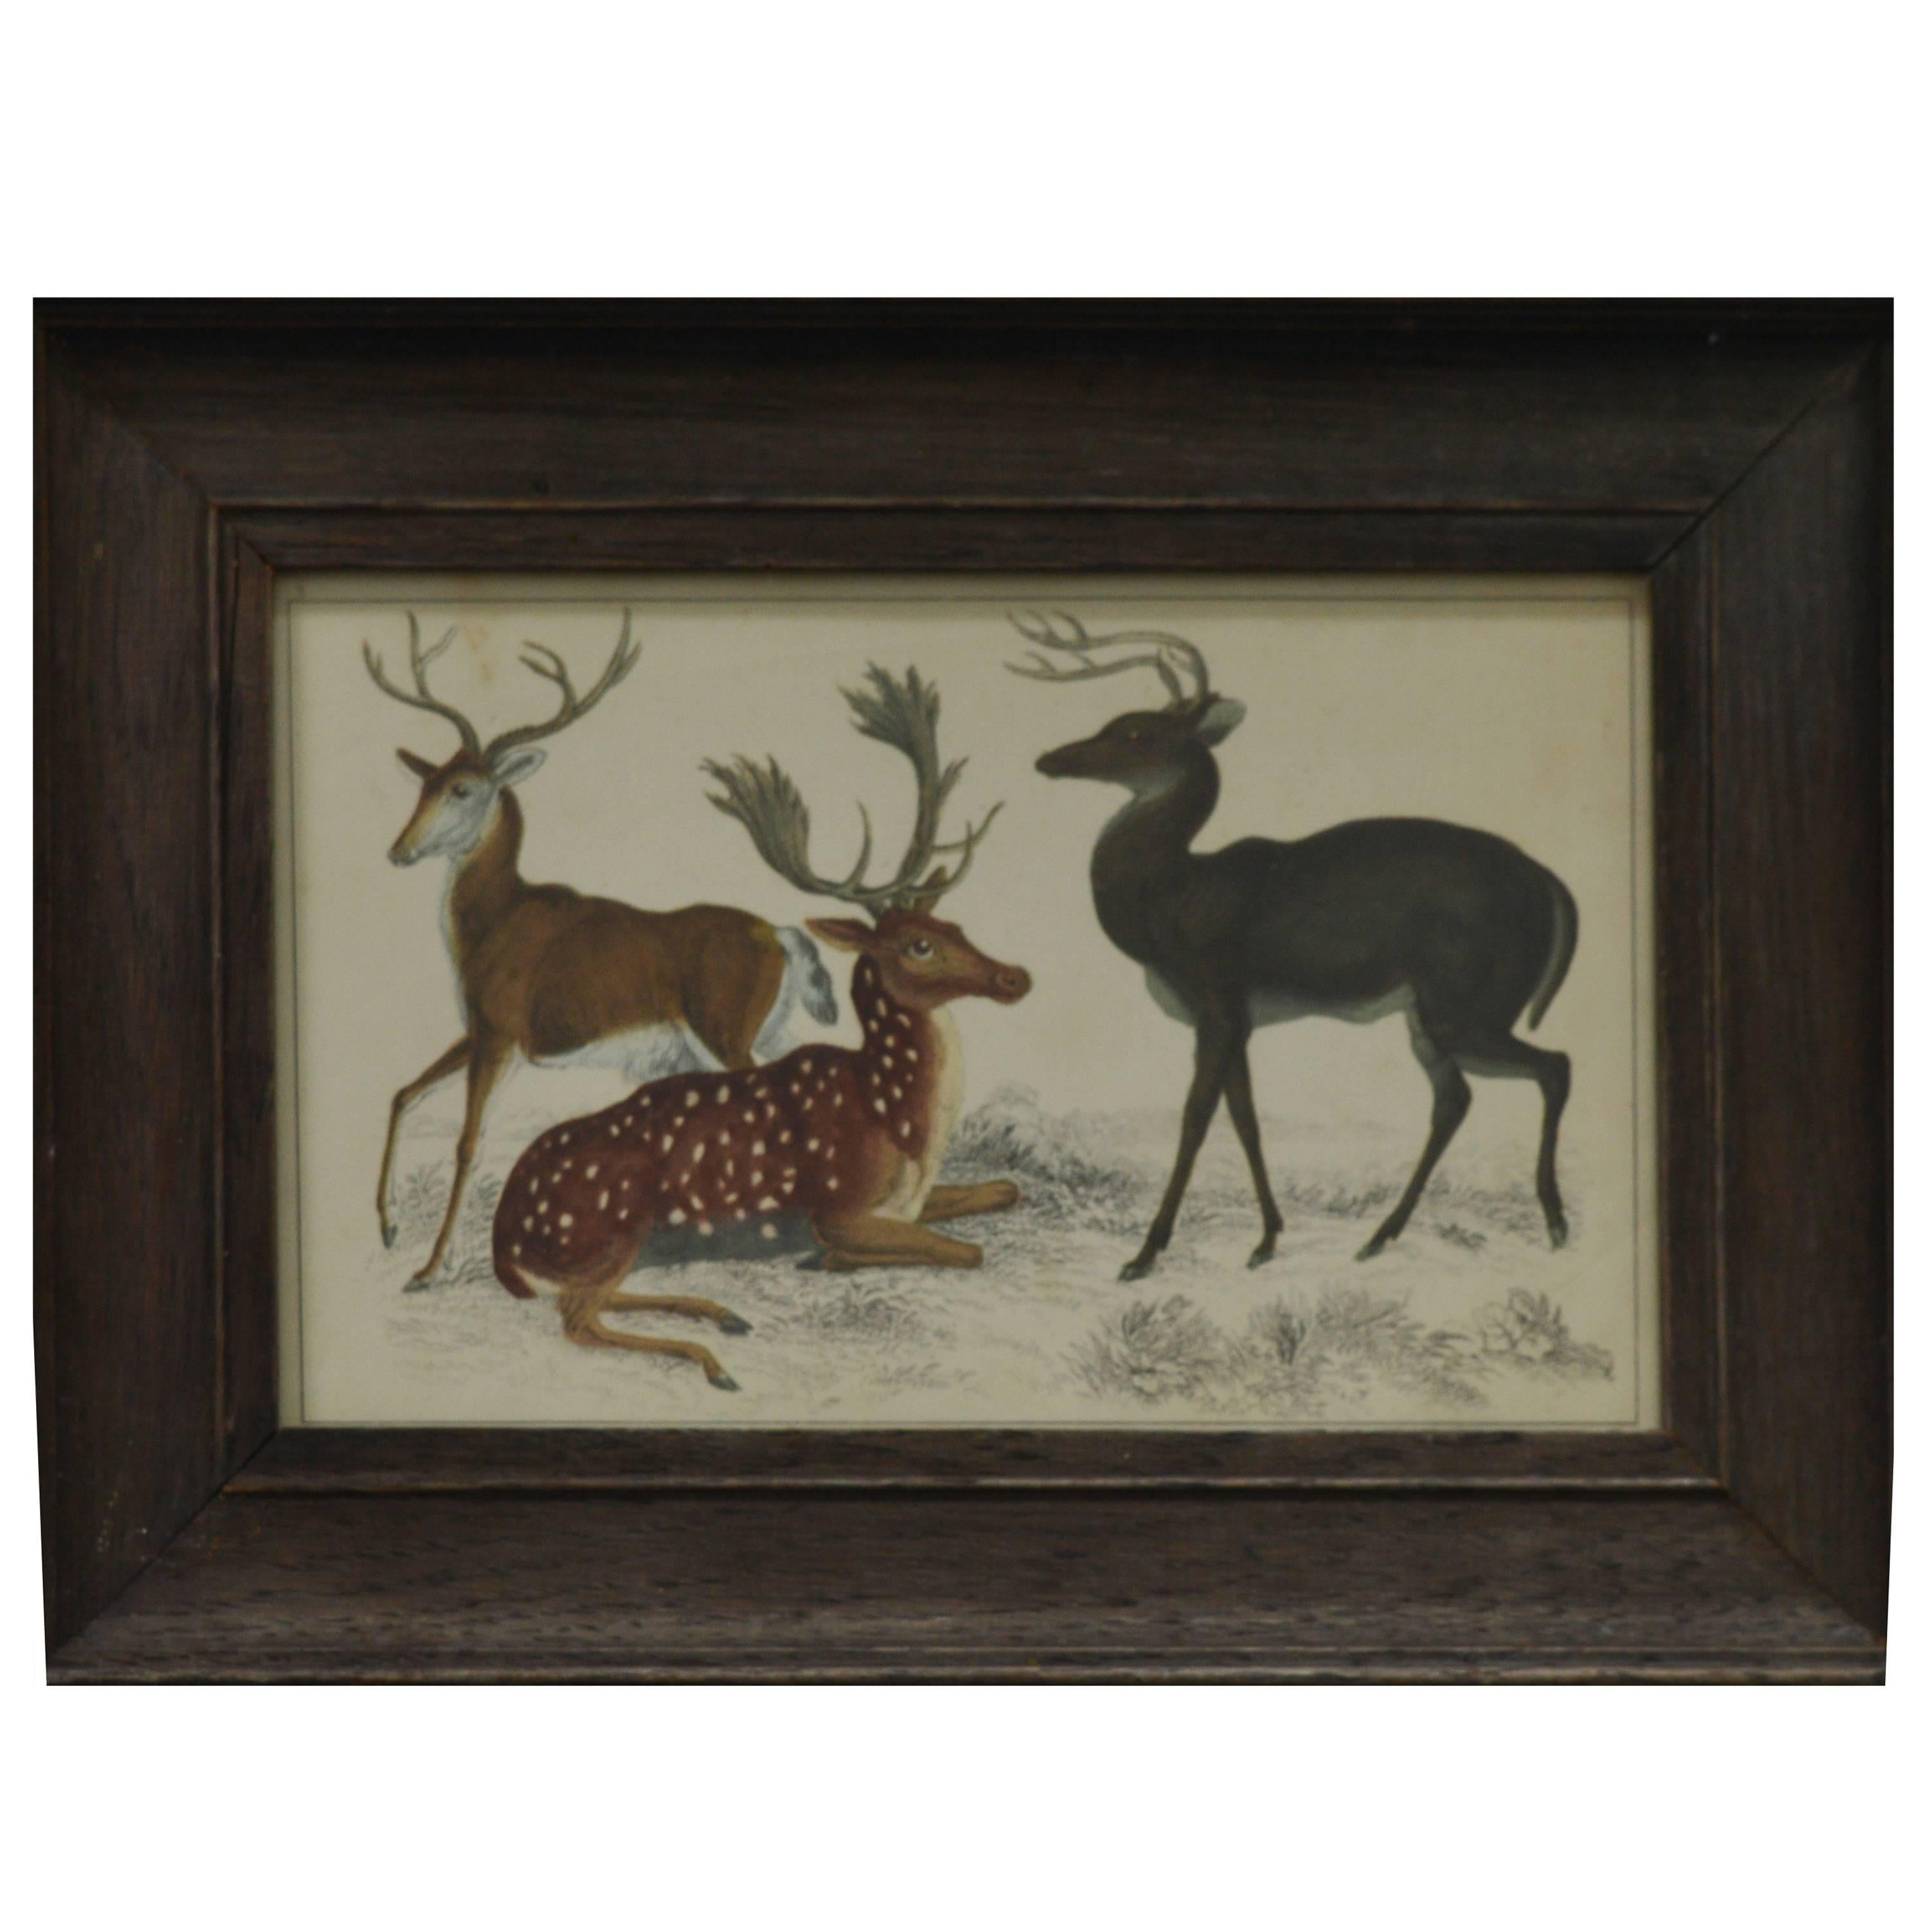 Original Antique Print of Deer, English, circa 1850